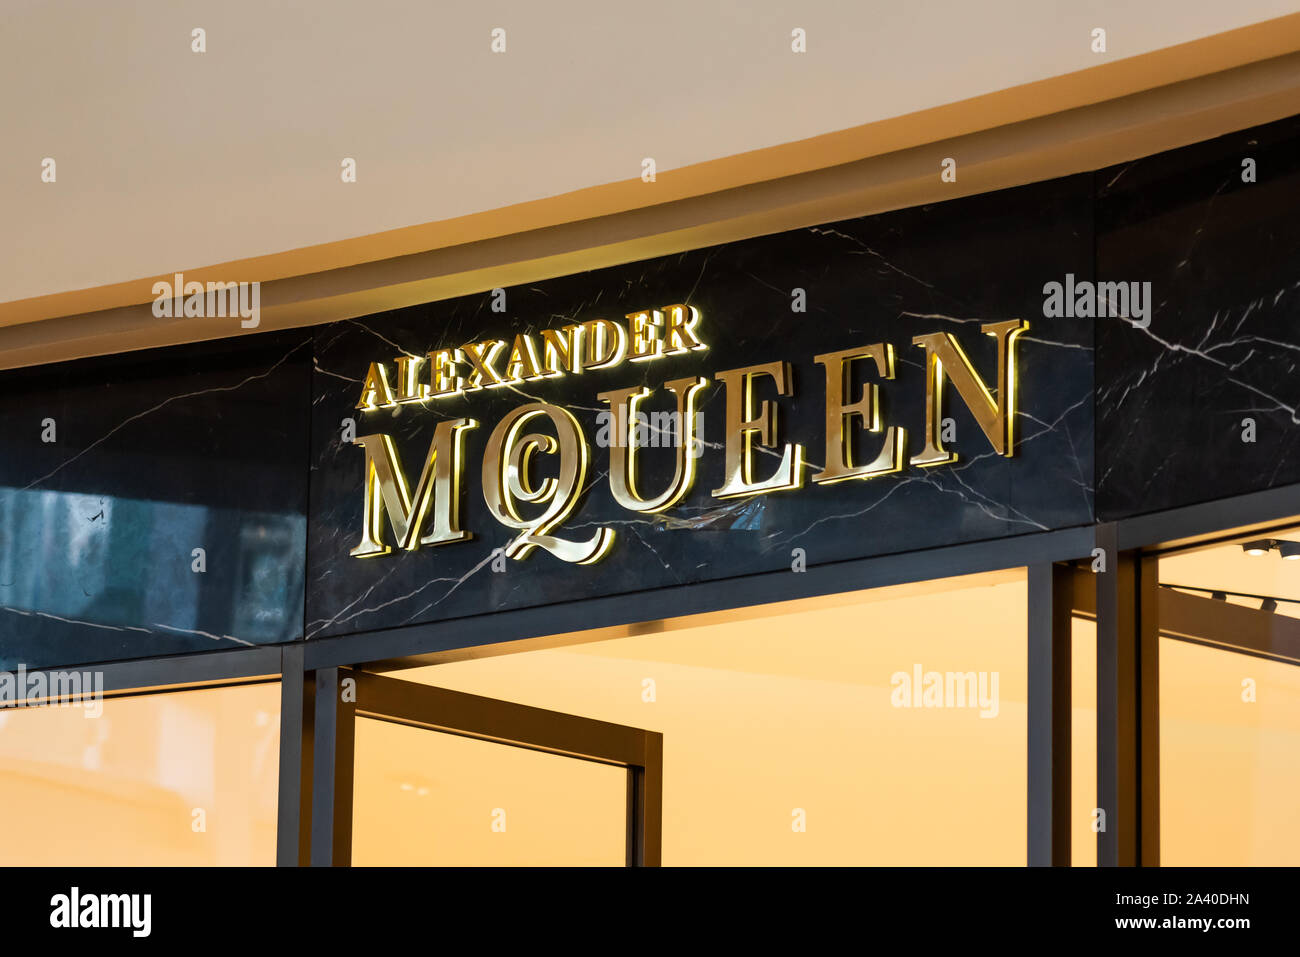 alexander mcqueen fashion house